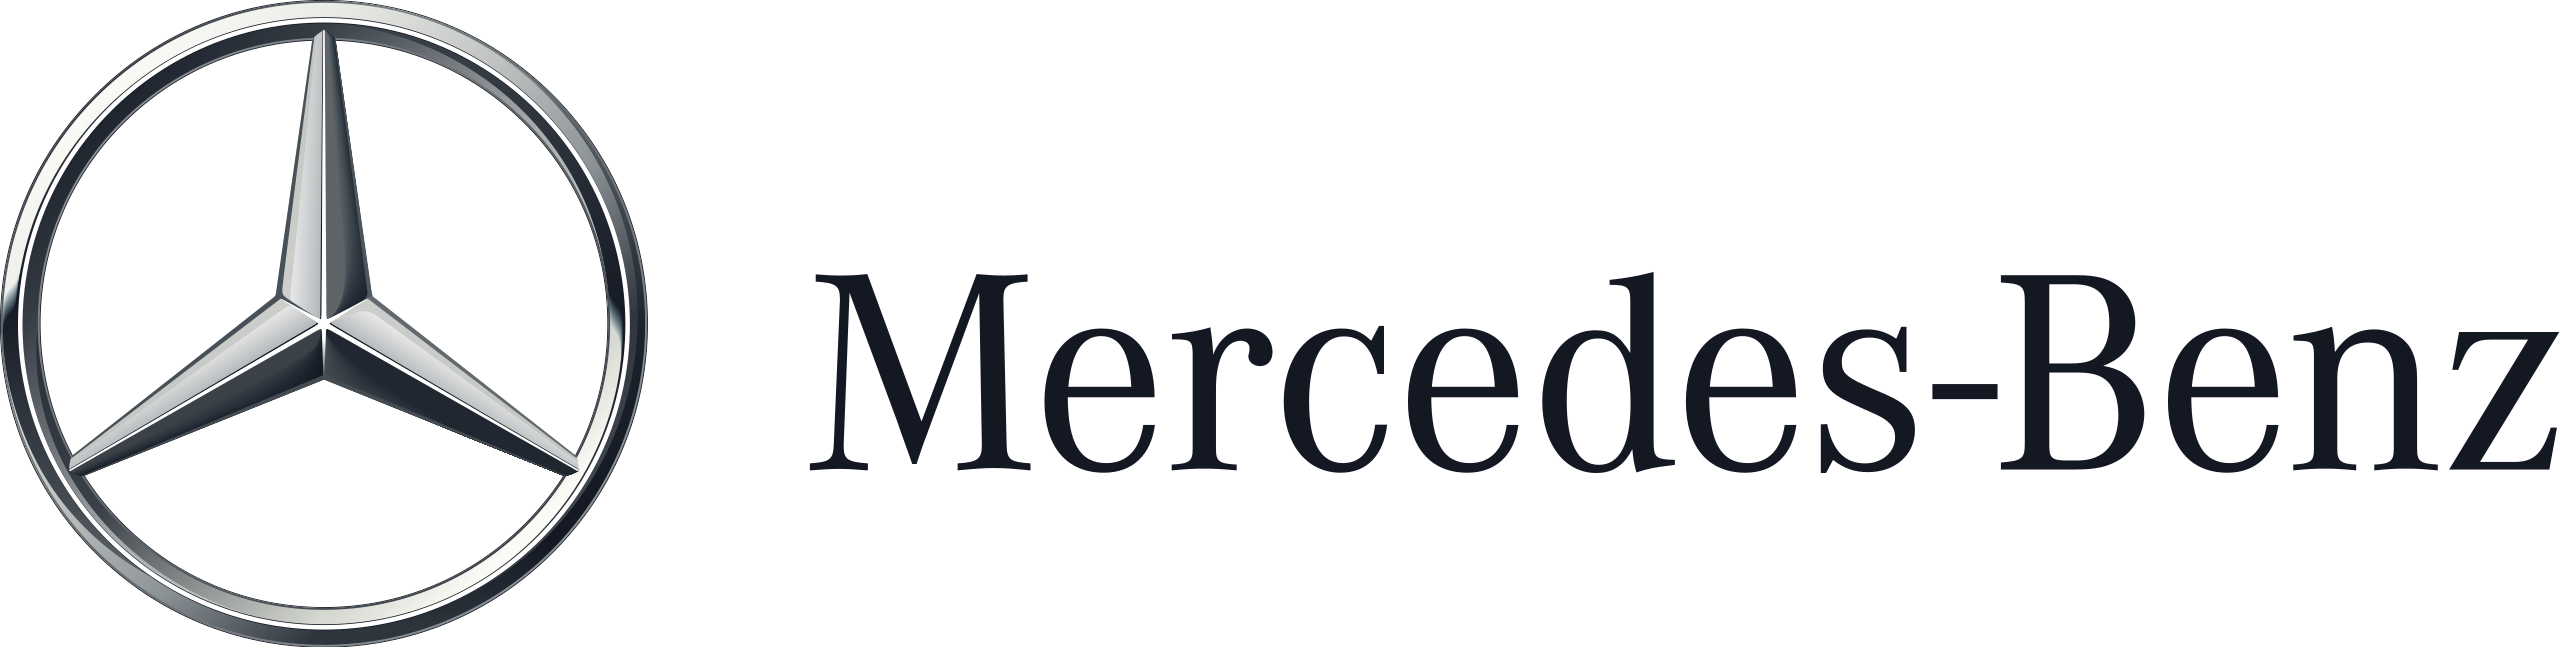 Mercedes Benz sponsor logo